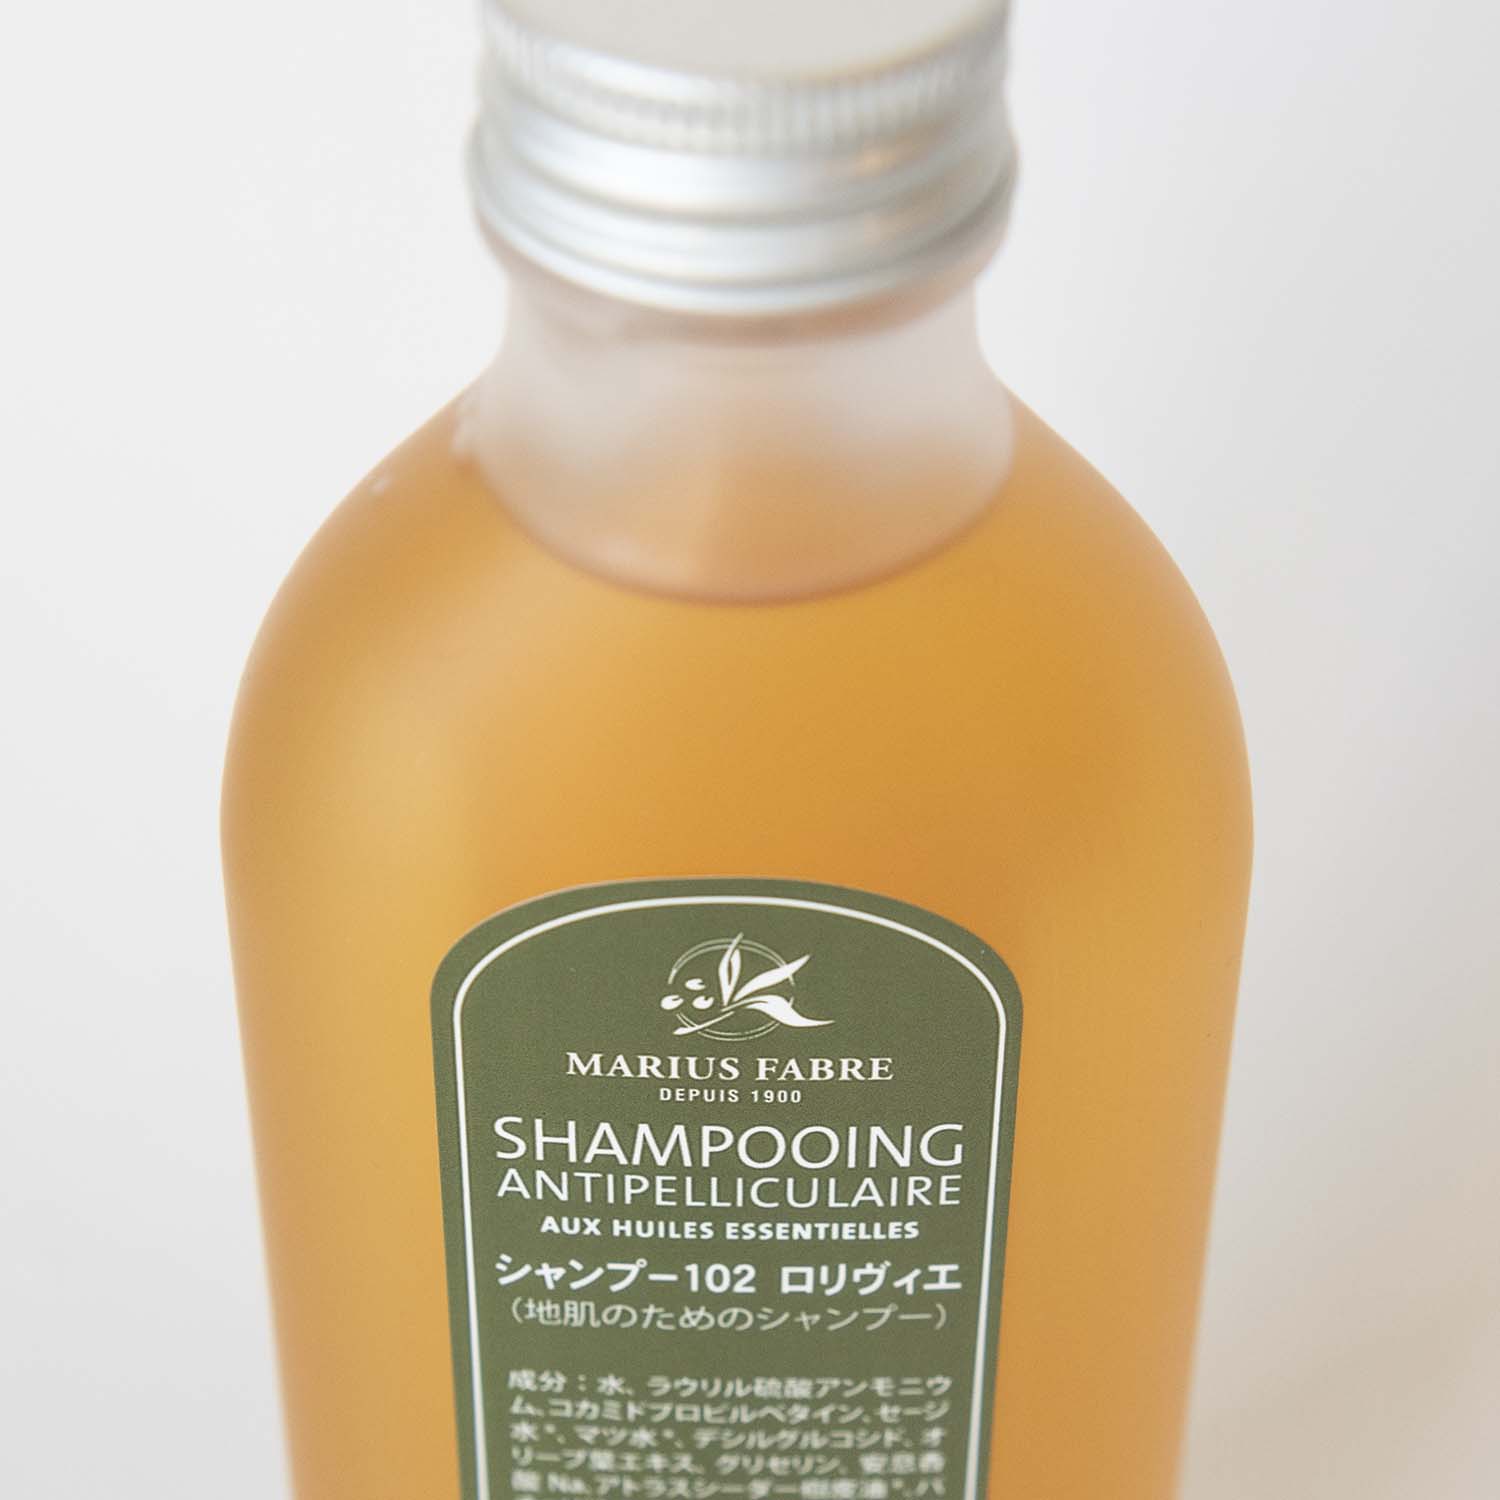 L’olivier Shampoo 102